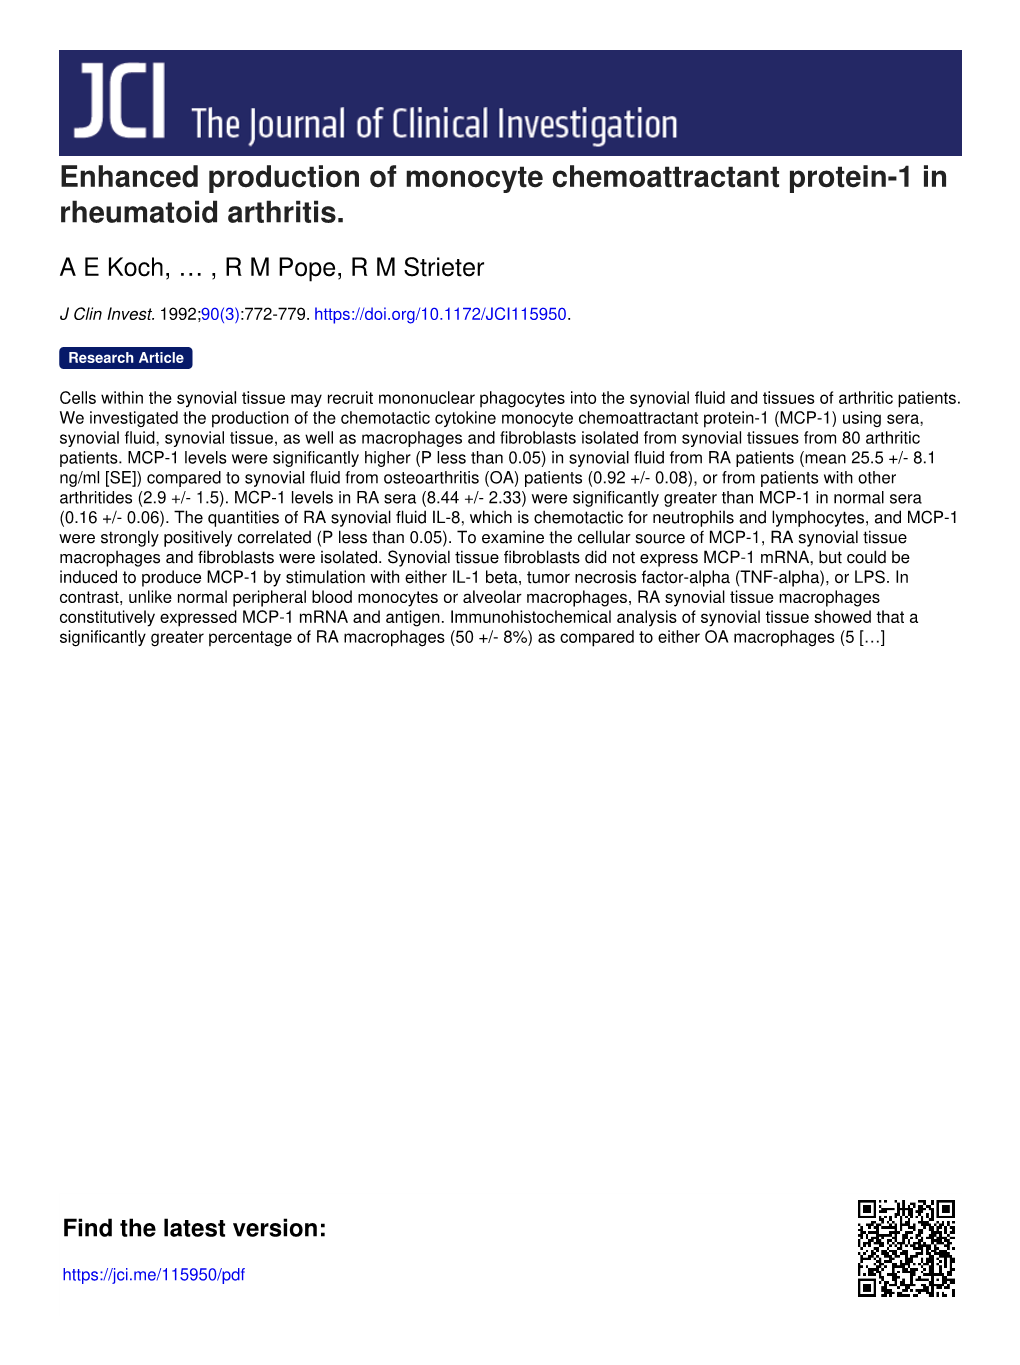 Enhanced Production of Monocyte Chemoattractant Protein-1 in Rheumatoid Arthritis